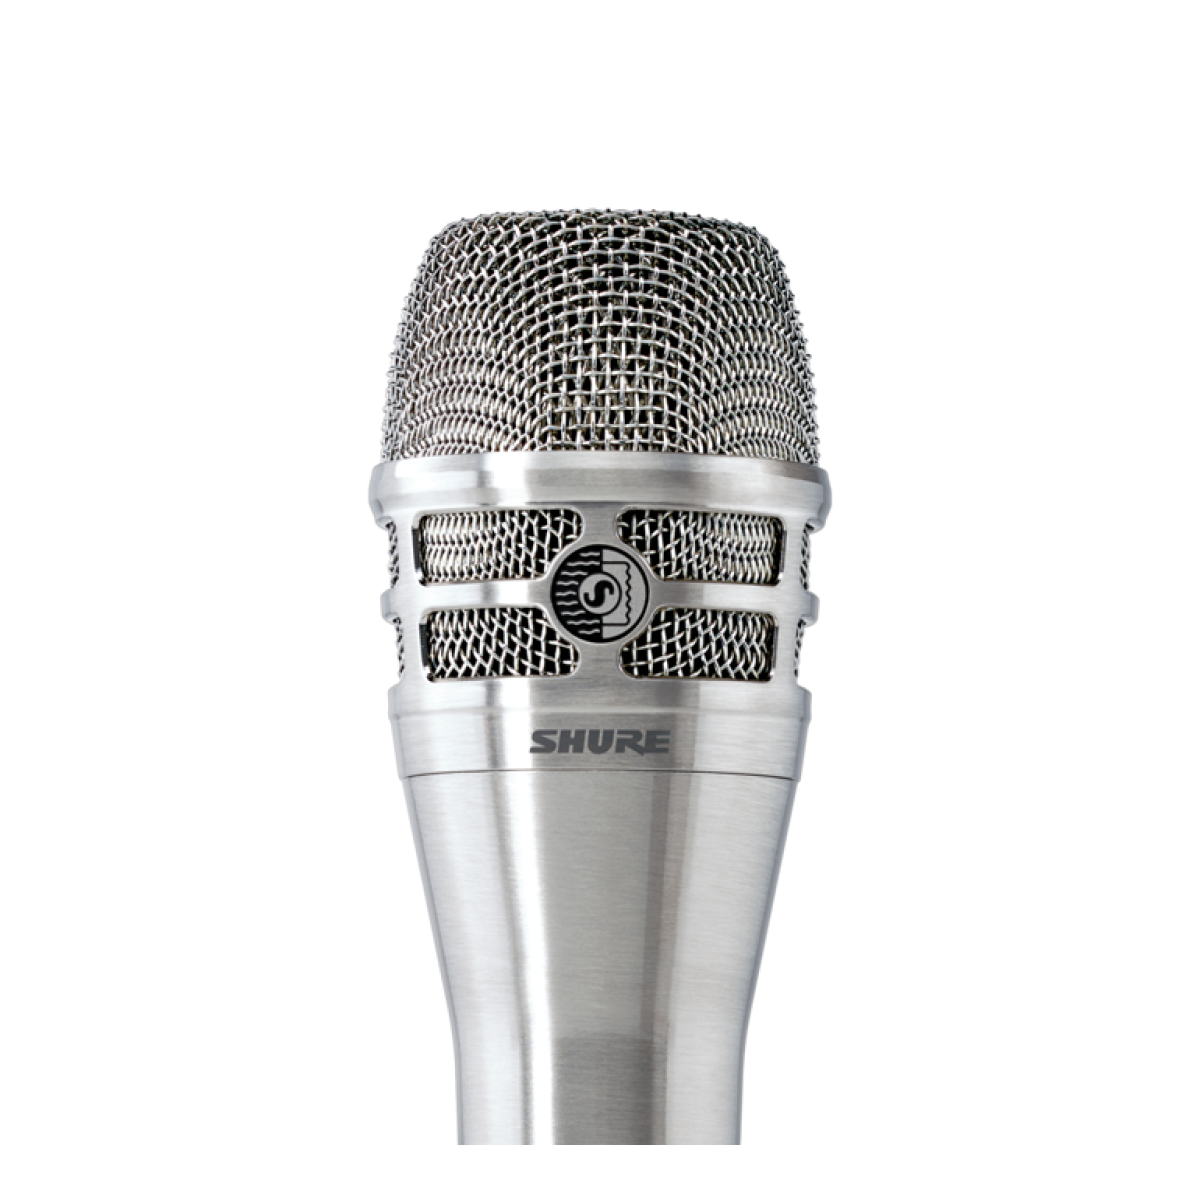 Shure микрофоны для вокала. Shure микрофон Shure ksm8/n. Shure ksm8 радио. Shure ksm109. Микрофон проводной Shure ksm9.